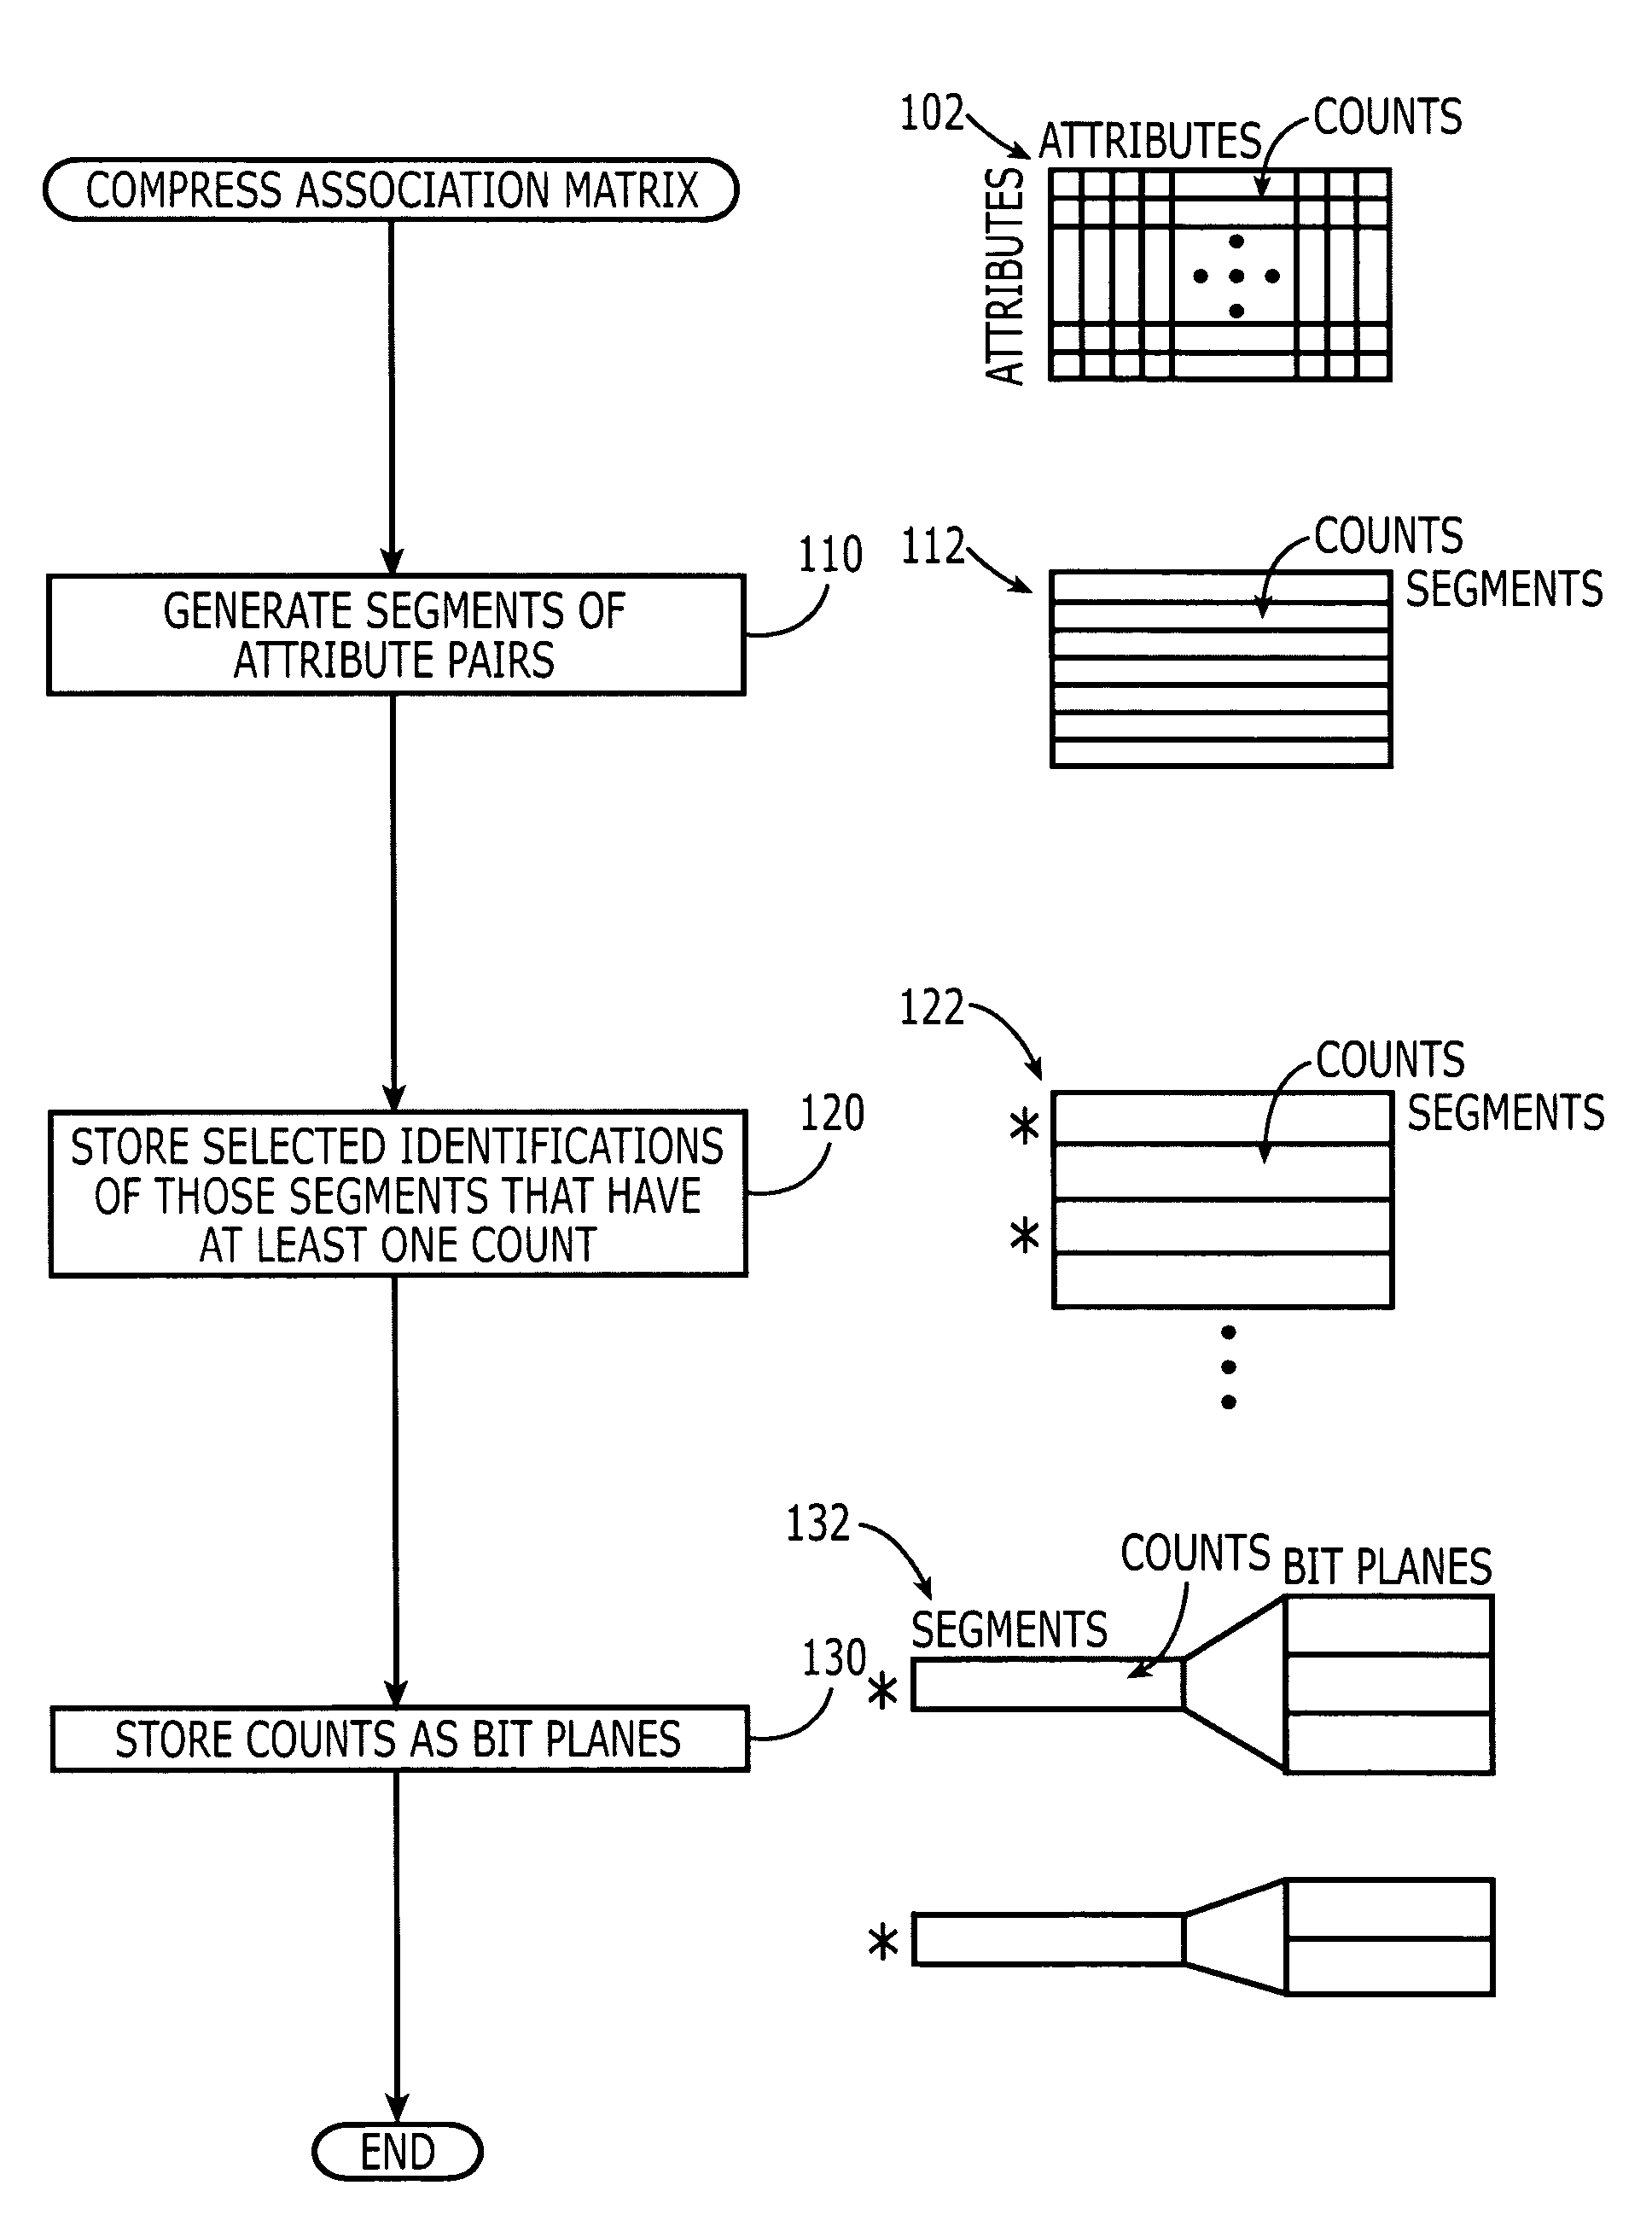 Associative matrix methods, systems and computer program products using bit plane representations of selected segments